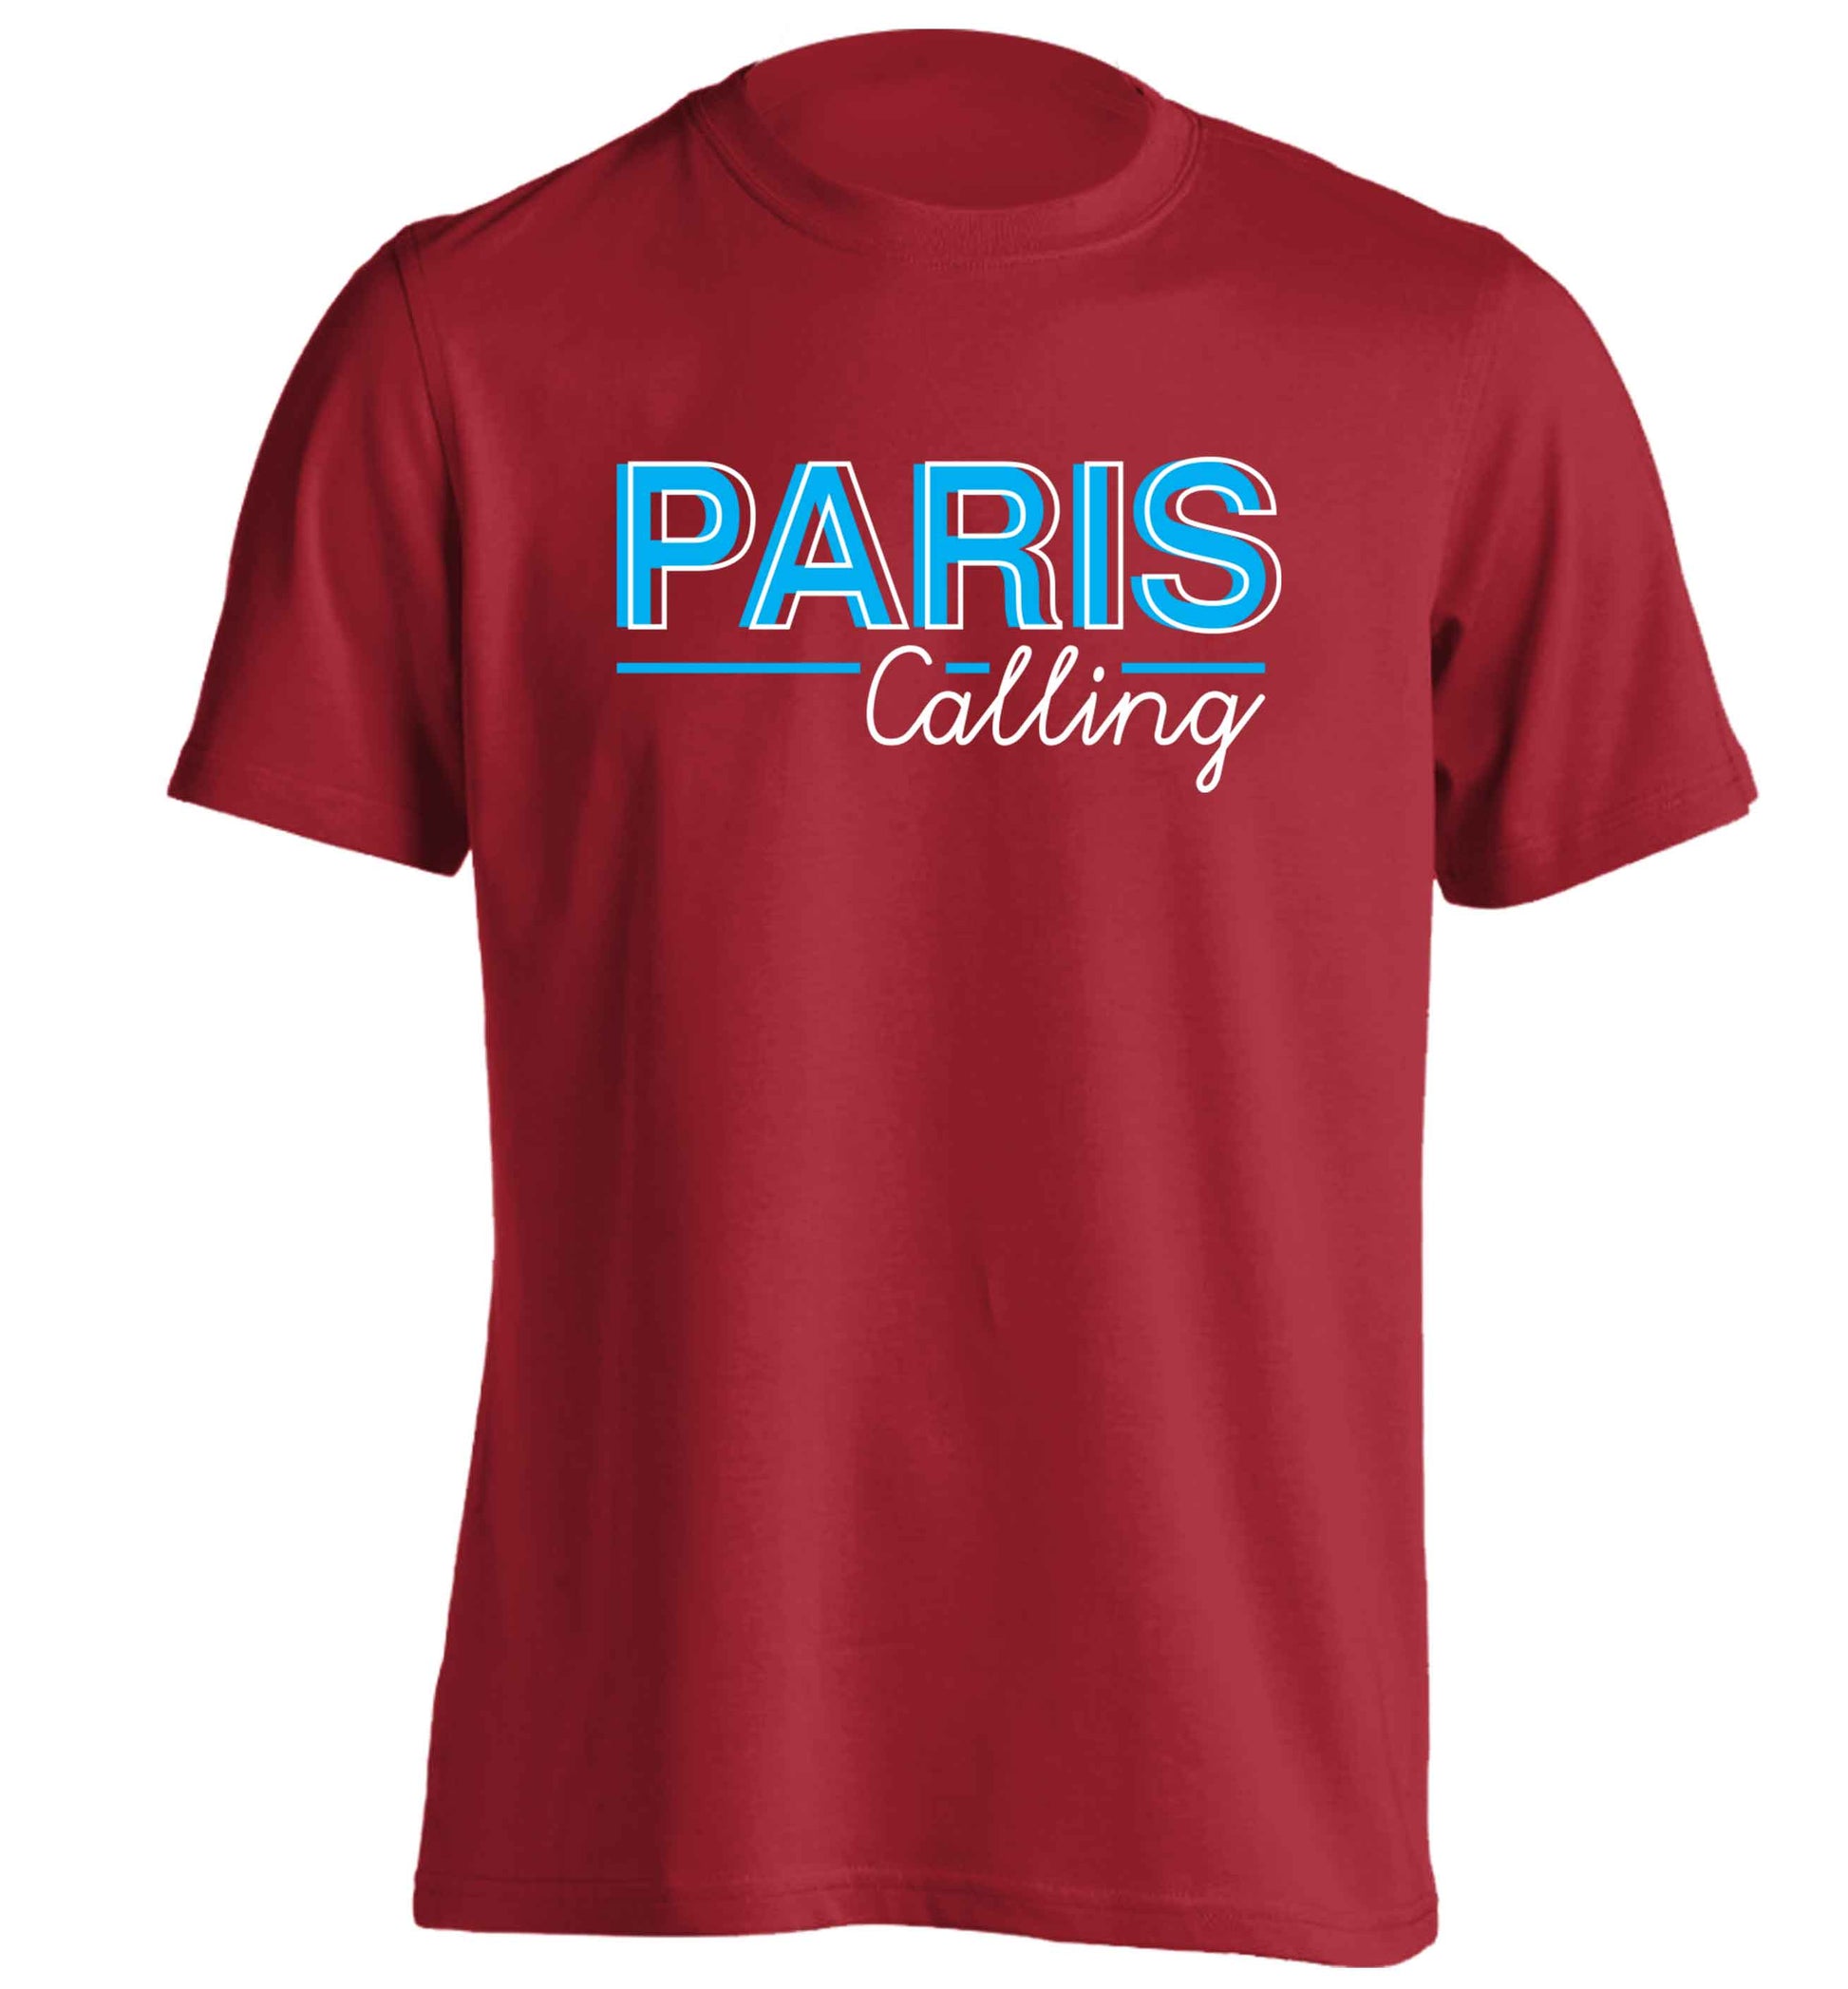 Paris calling adults unisex red Tshirt 2XL